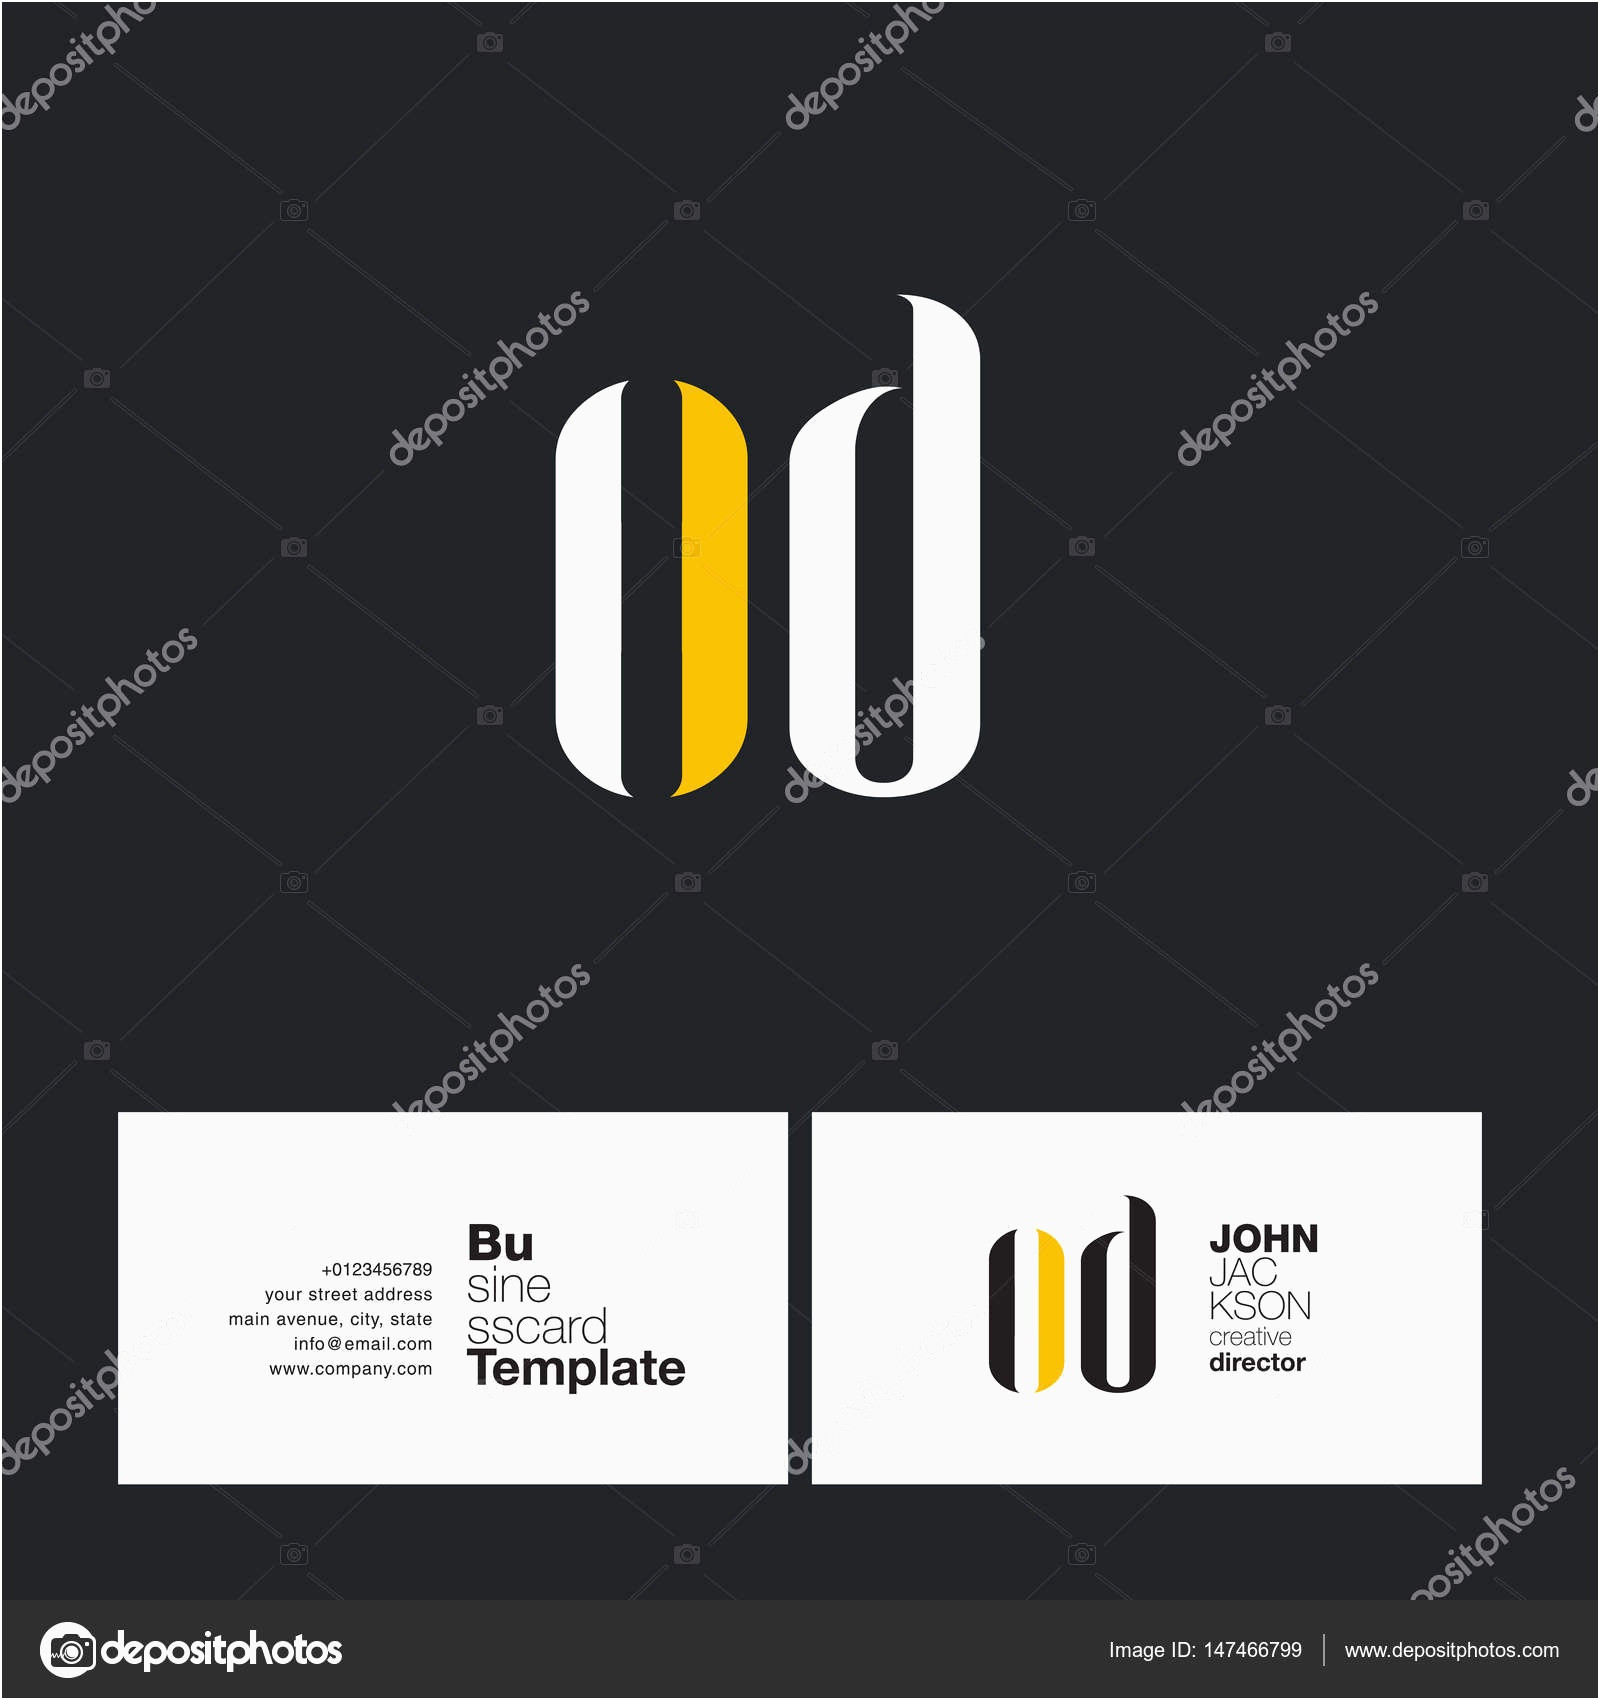 Download Business Card Templates Elegant Design Business Of Business Card Template Publisher 2010